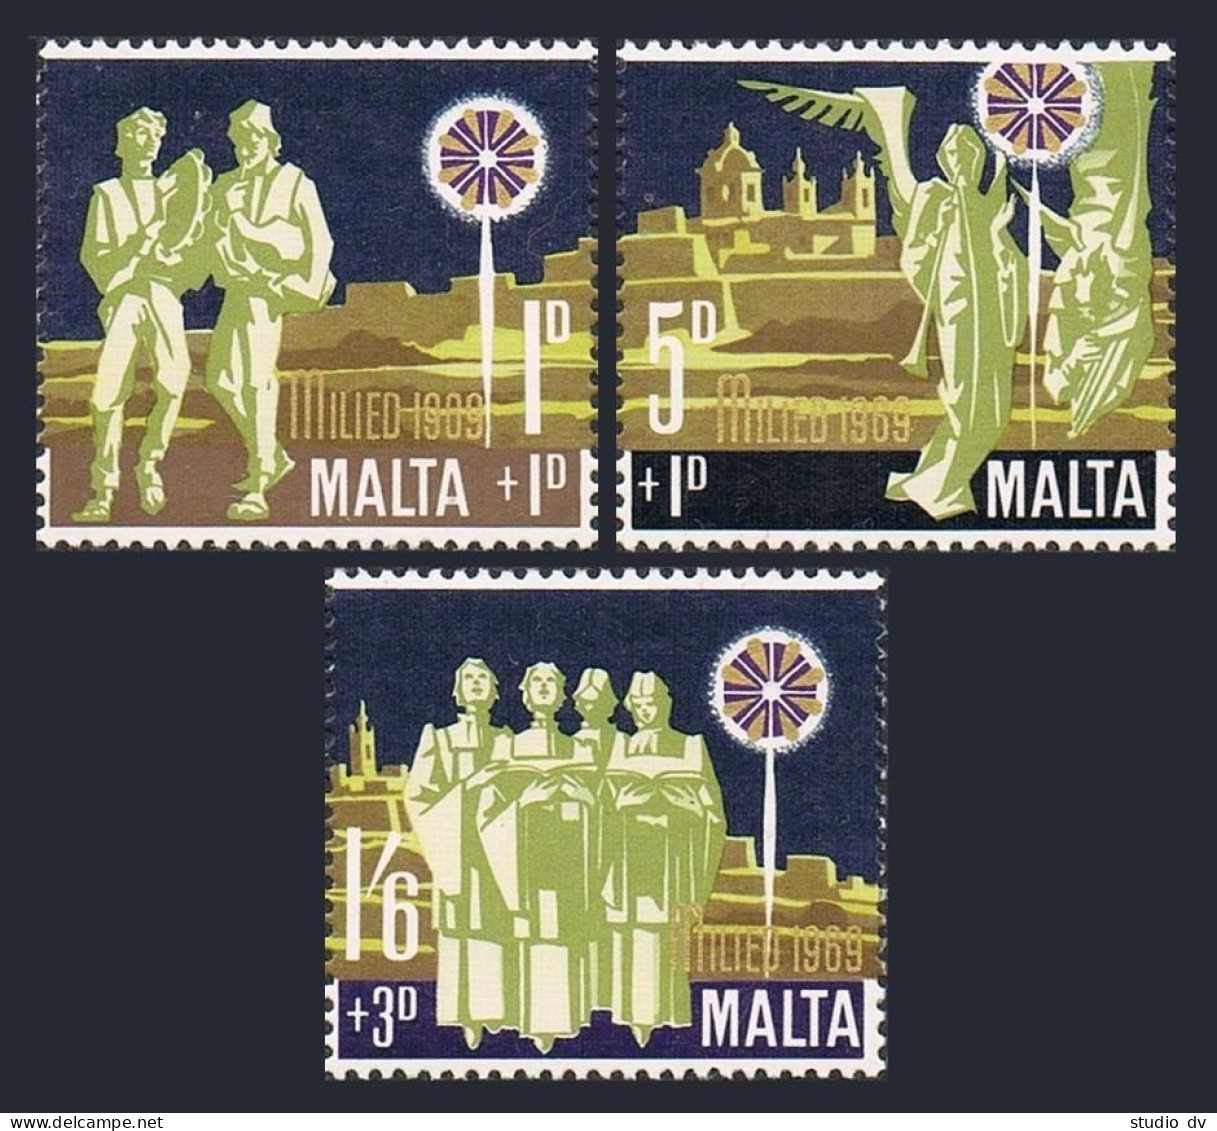 Malta B1-B3,B3a Strip, MNH. Michel 398-400. Christmas 1969. Star Of Bethlehem. - Malte